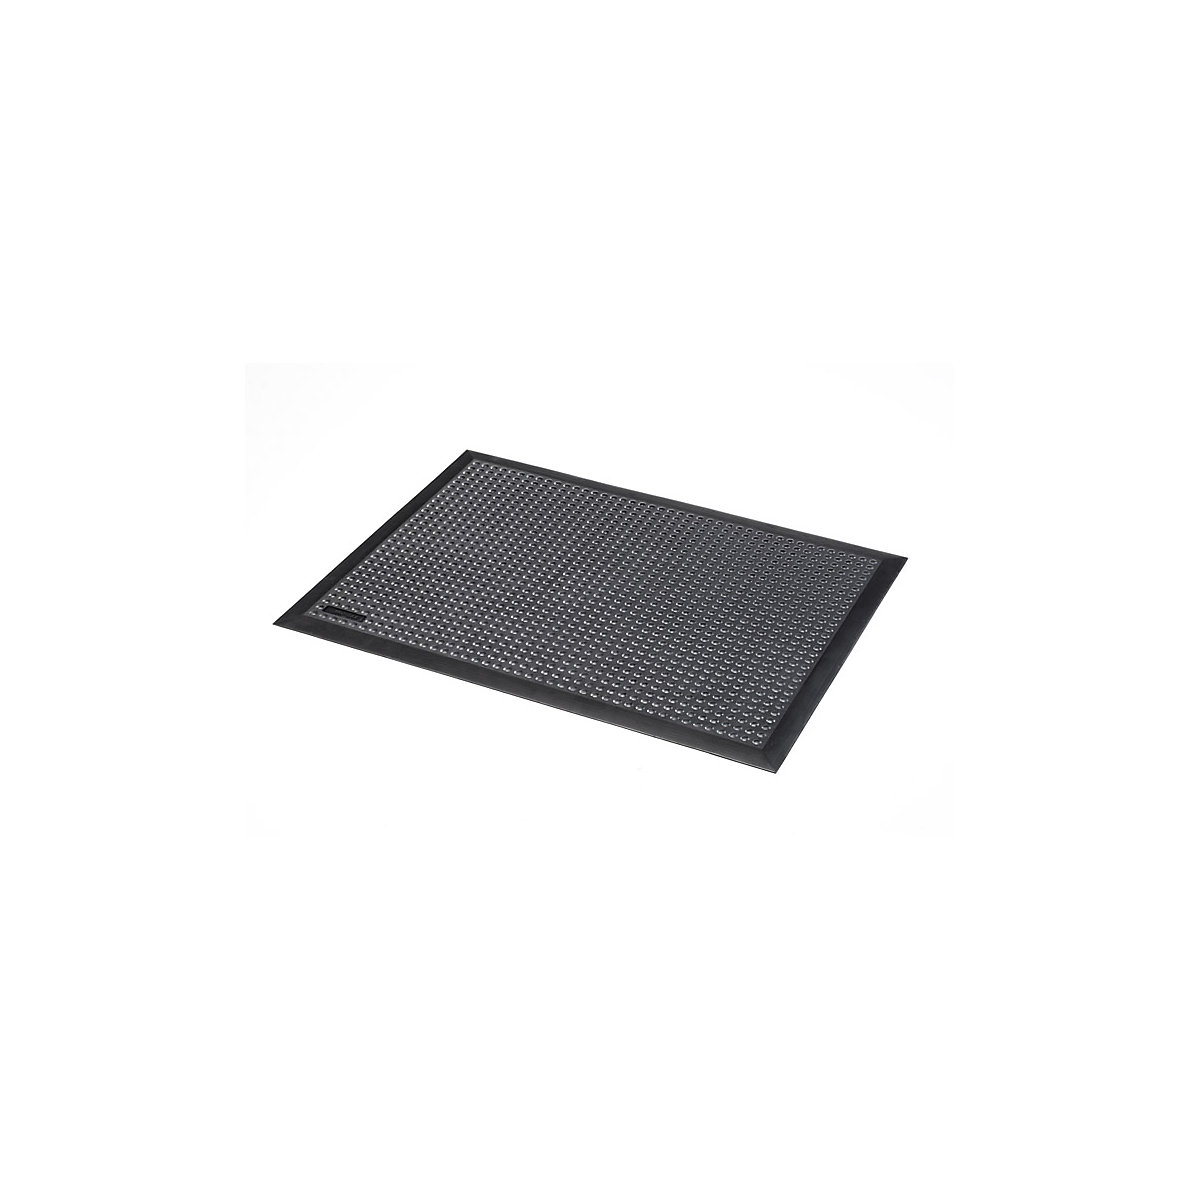 Skystep studded ESD workstation matting – NOTRAX, black, LxWxH 1200 x 900 x 13 mm-5